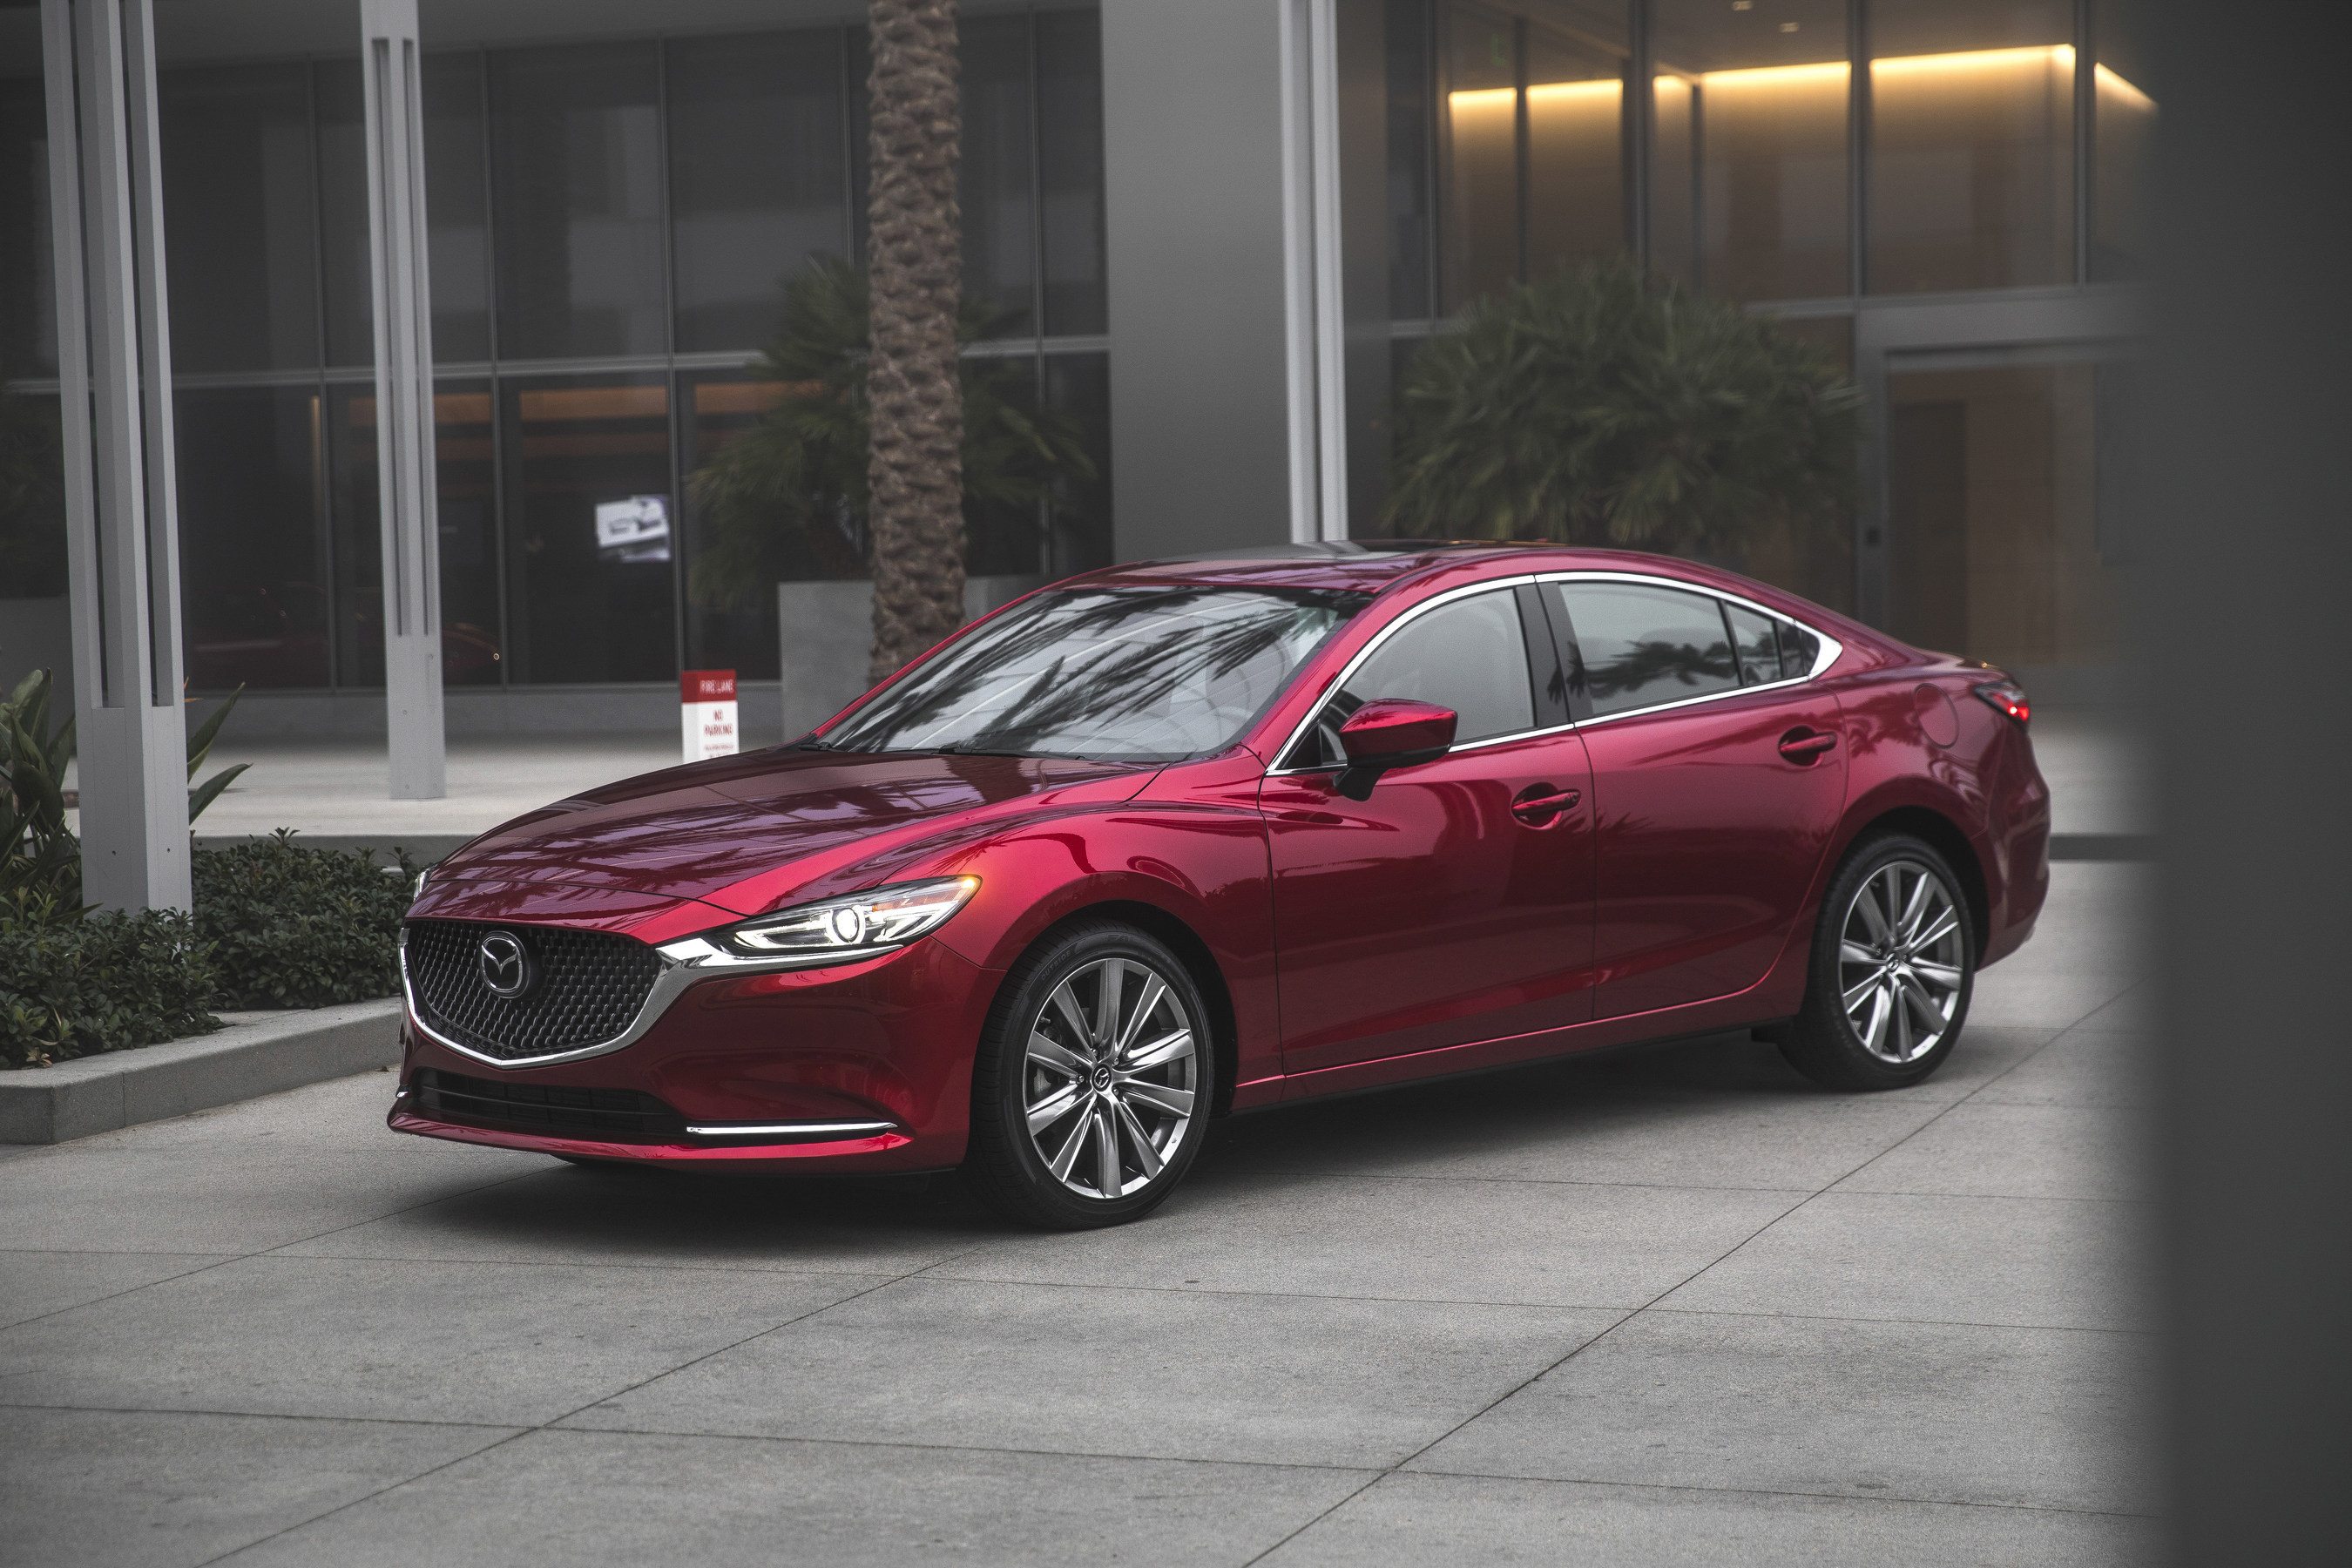 Refined 2018 Mazda6 Brings Turbo Power Feb 20, 2018 Mazda Canada News